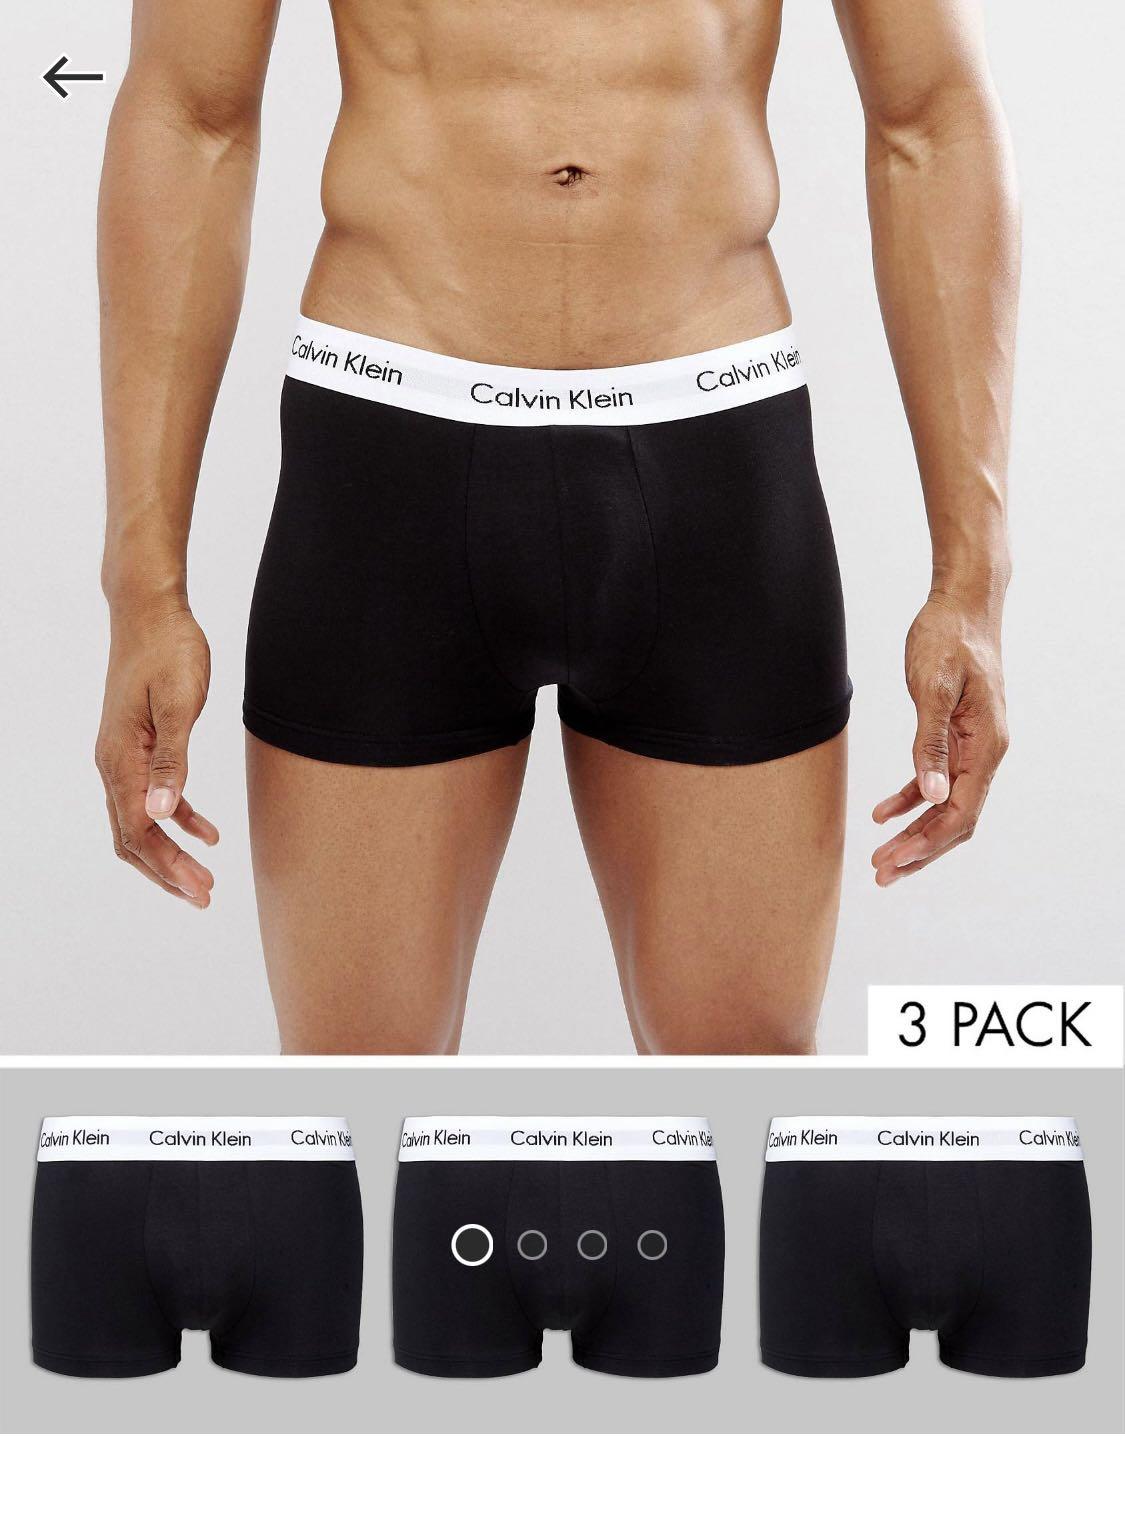 Calvin Klein 2 pack Micro Mesh Boxer Briefs Size M (32-34)